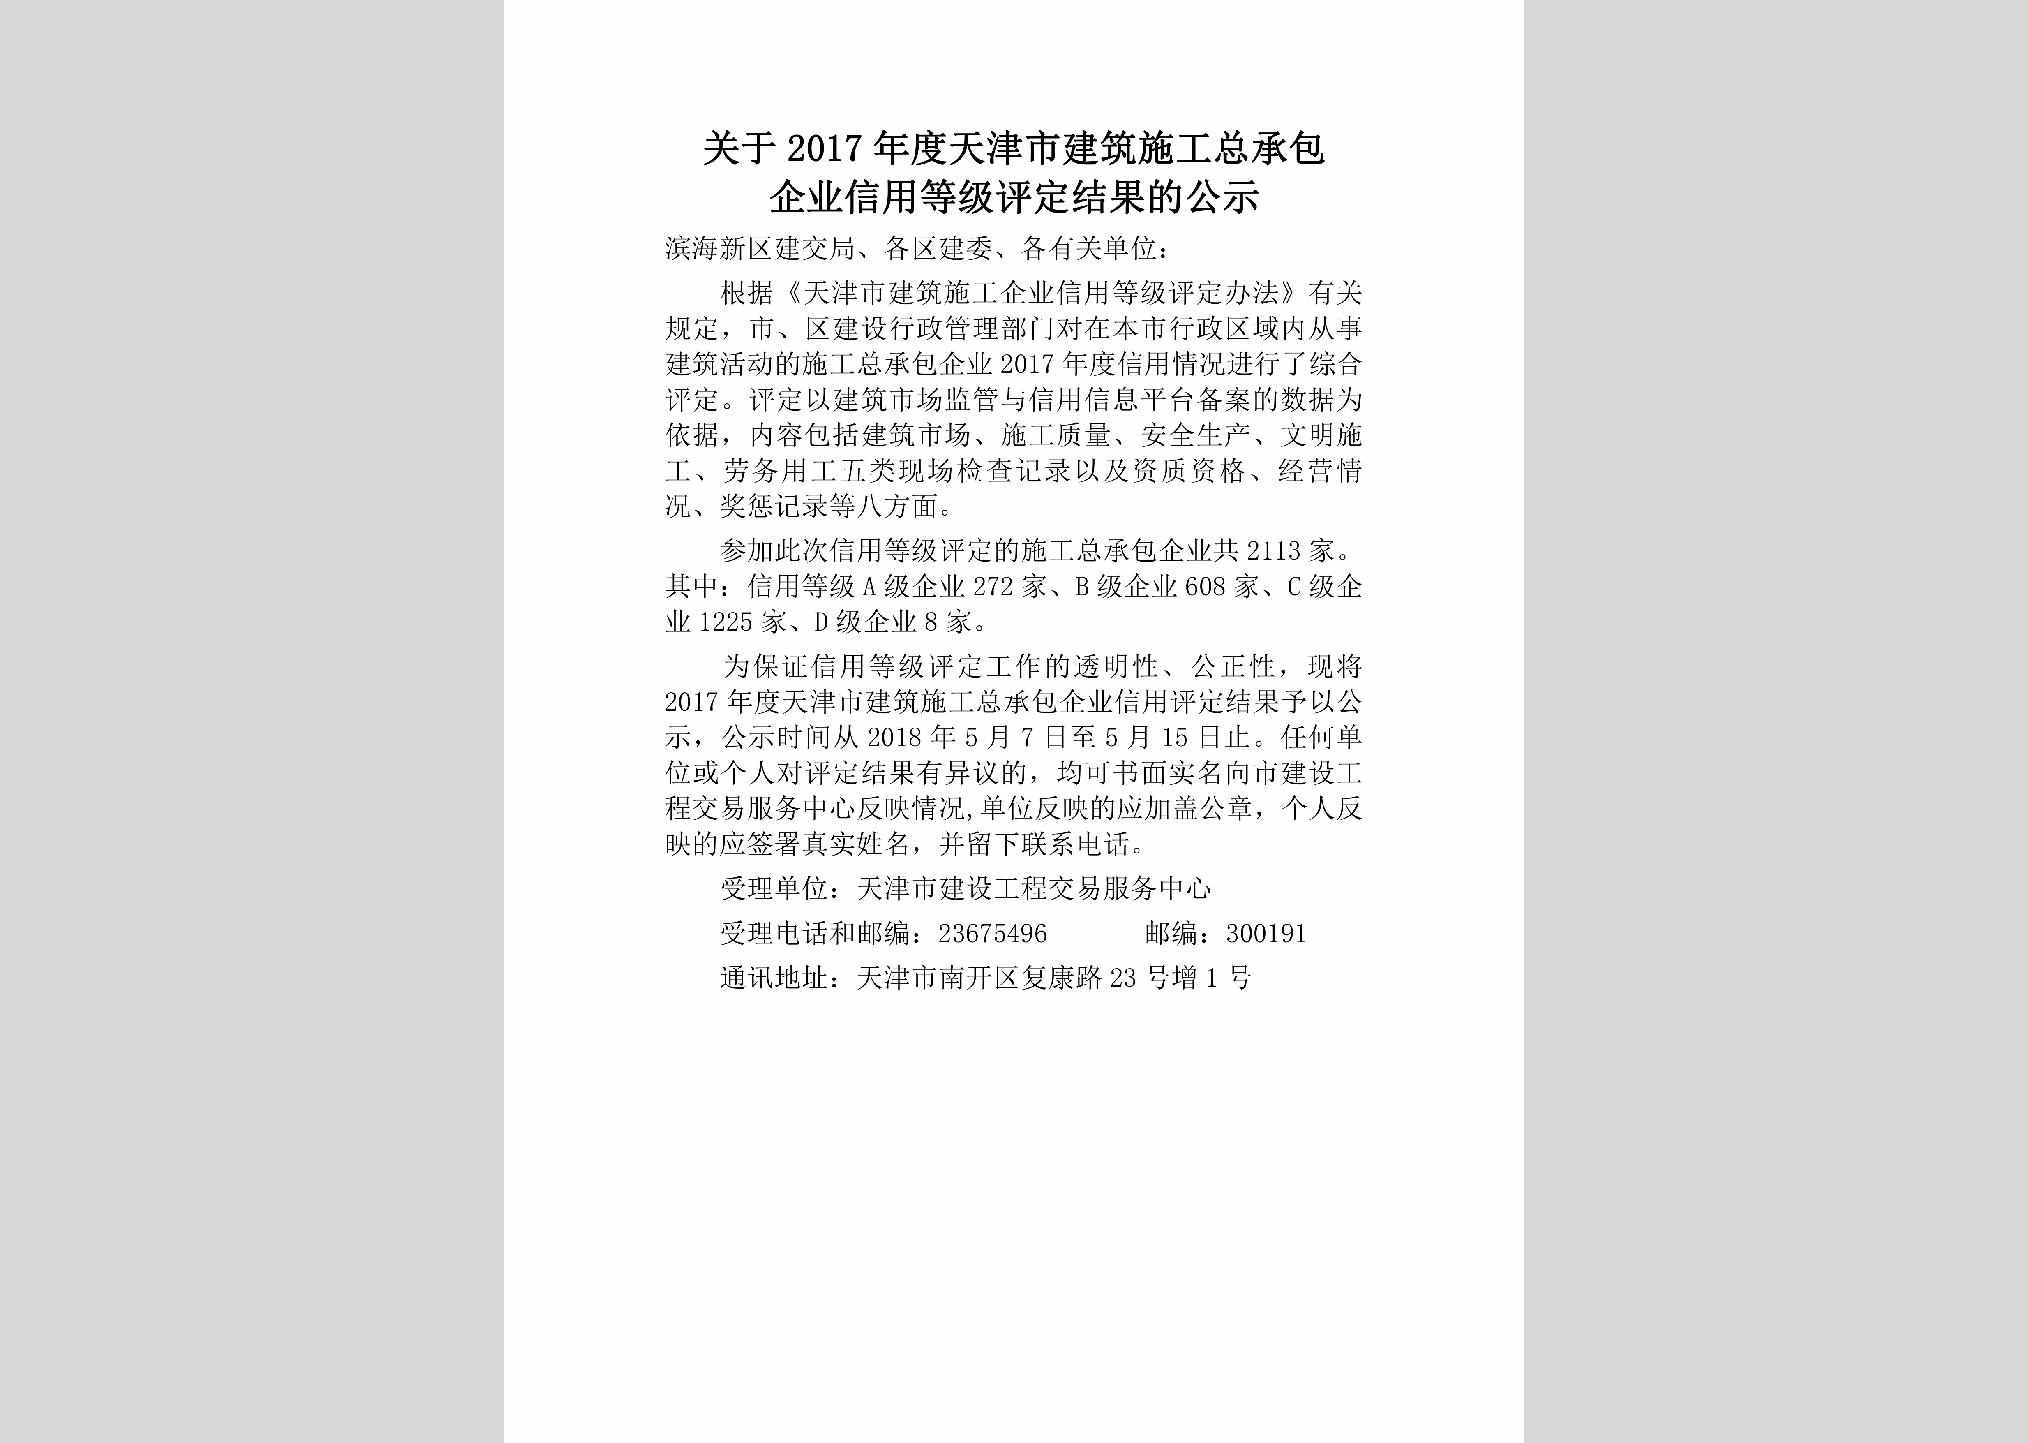 TJ-JZSGZCBG-2018：关于2017年度天津市建筑施工总承包企业信用等级评定结果的公示